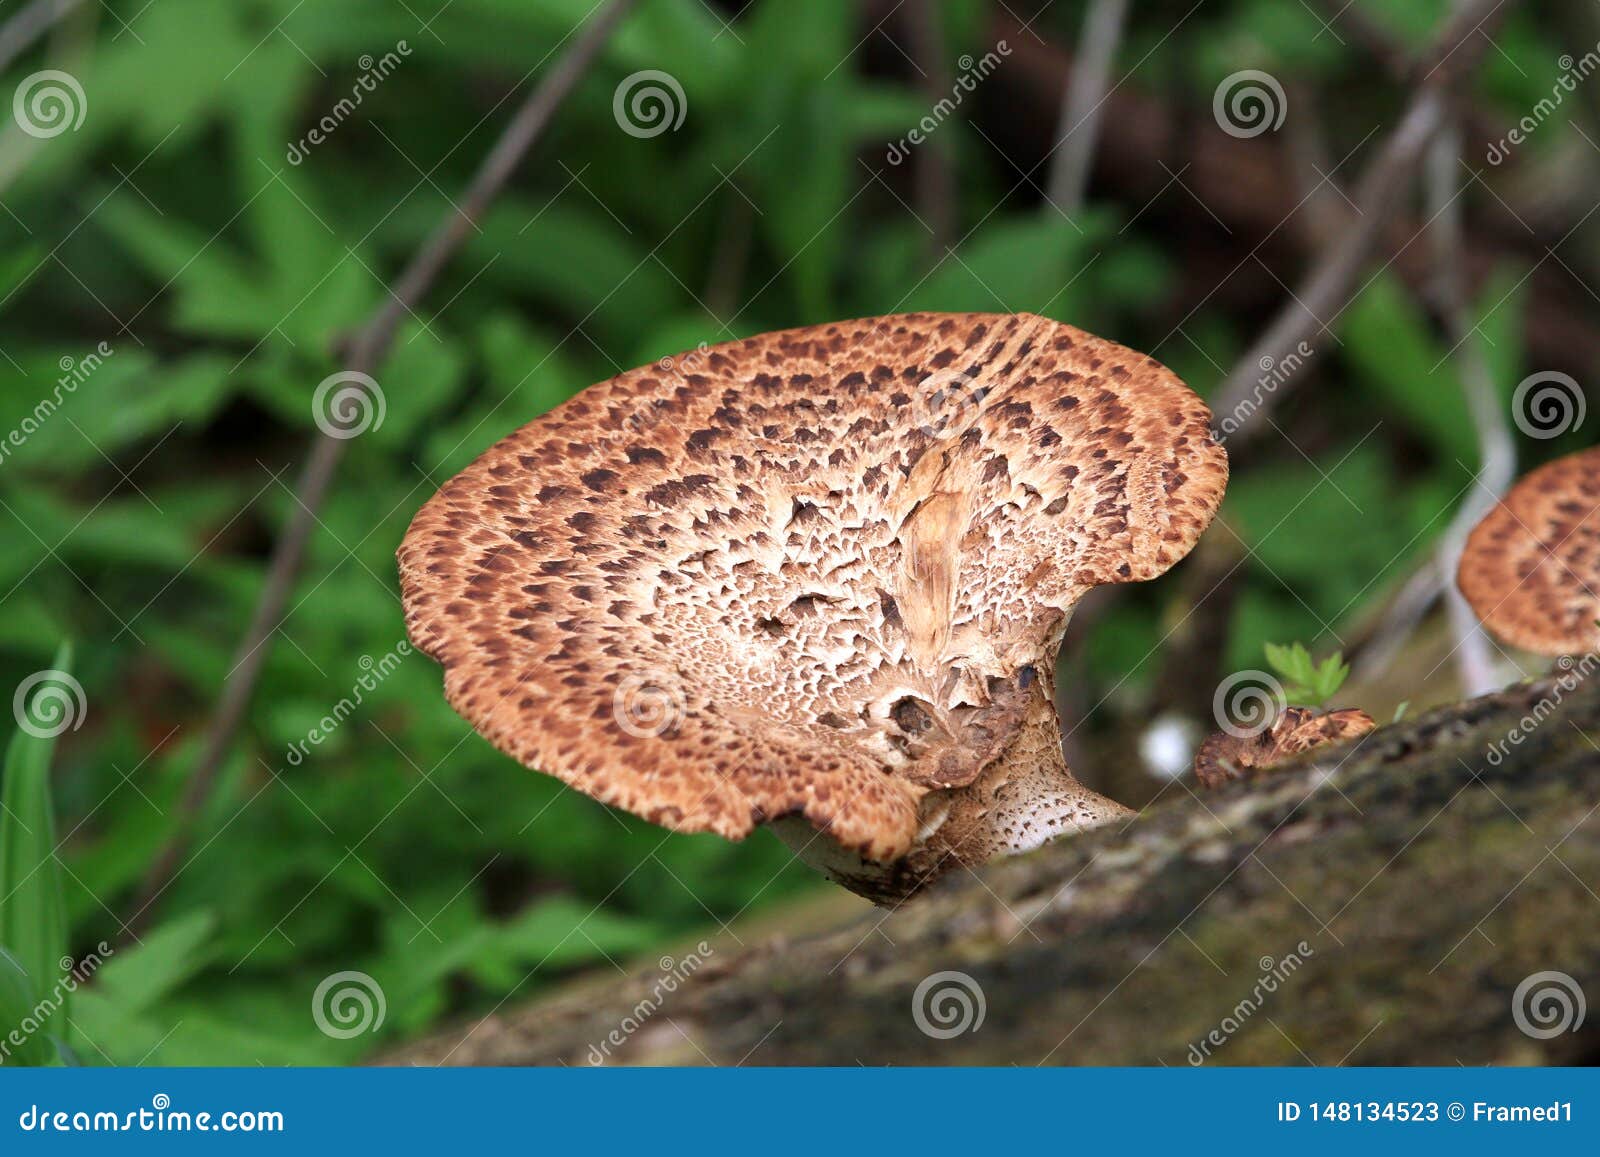 Pheasant Back Mushroom stock image. Image of fallen ...